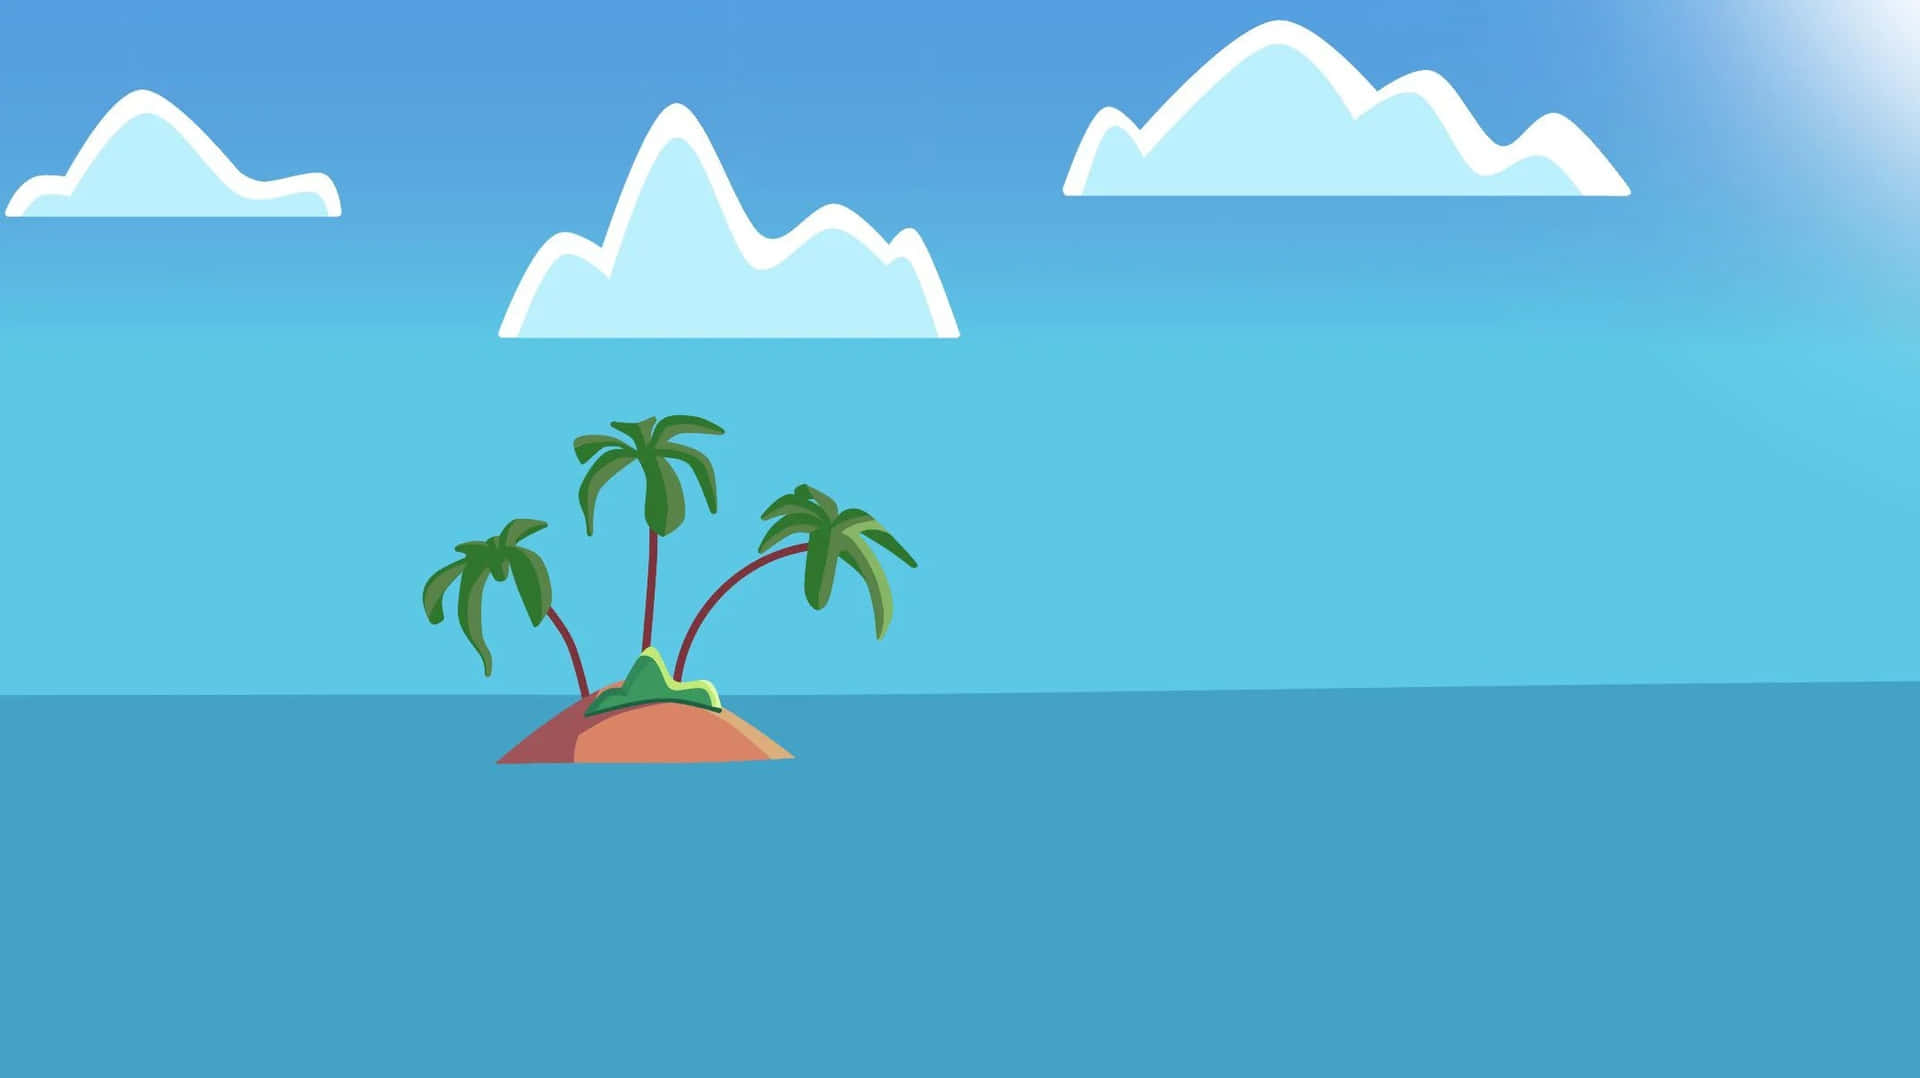 A Cartoon Island With Palm Trees And Mountains